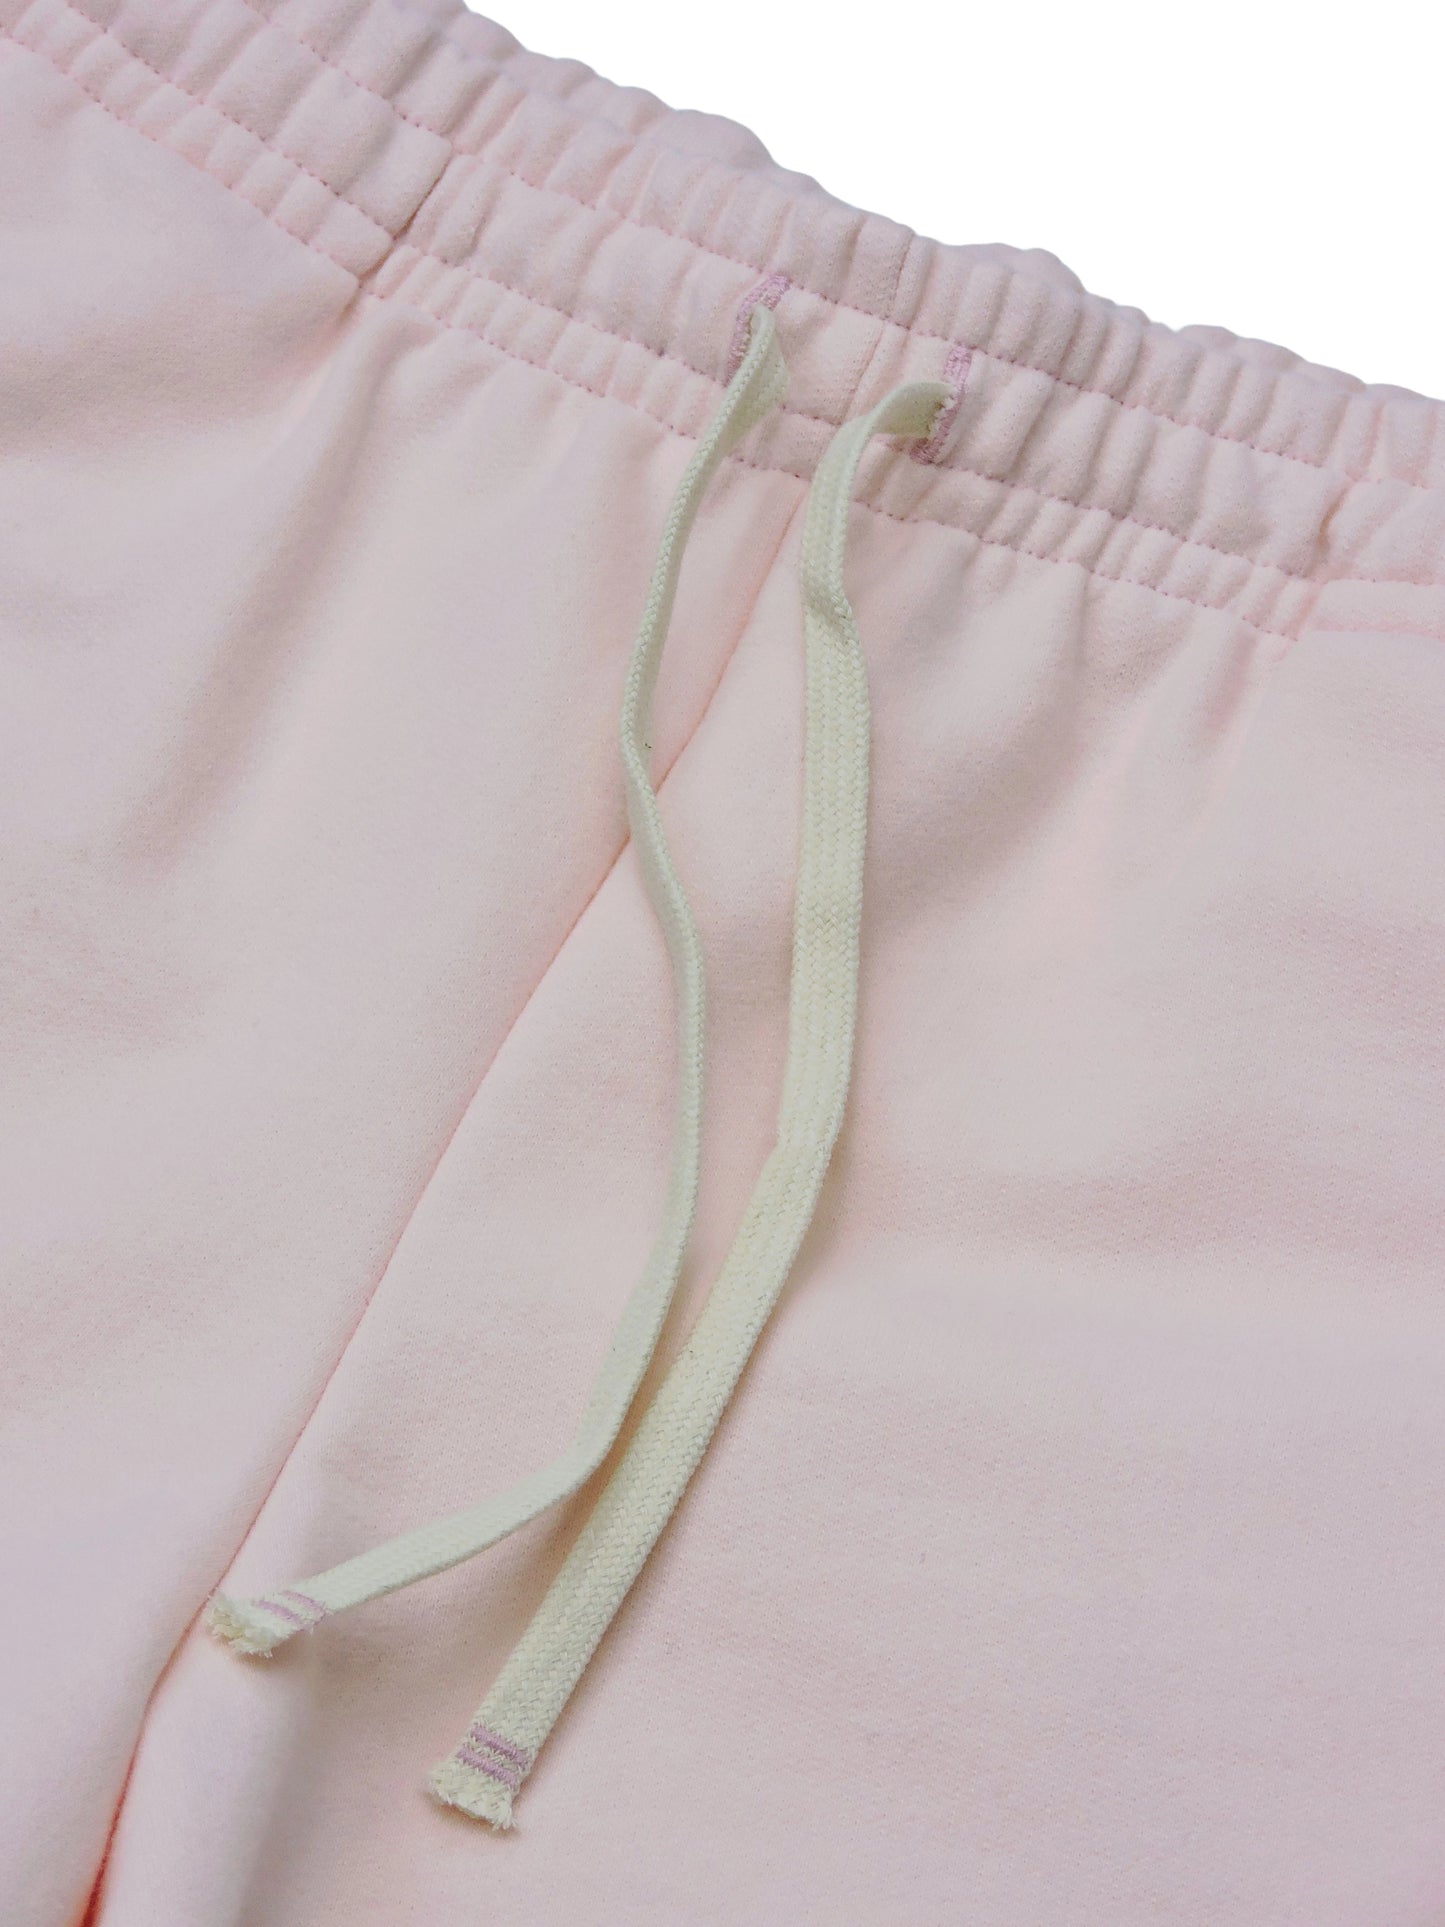 White drawstrings of pink mini short